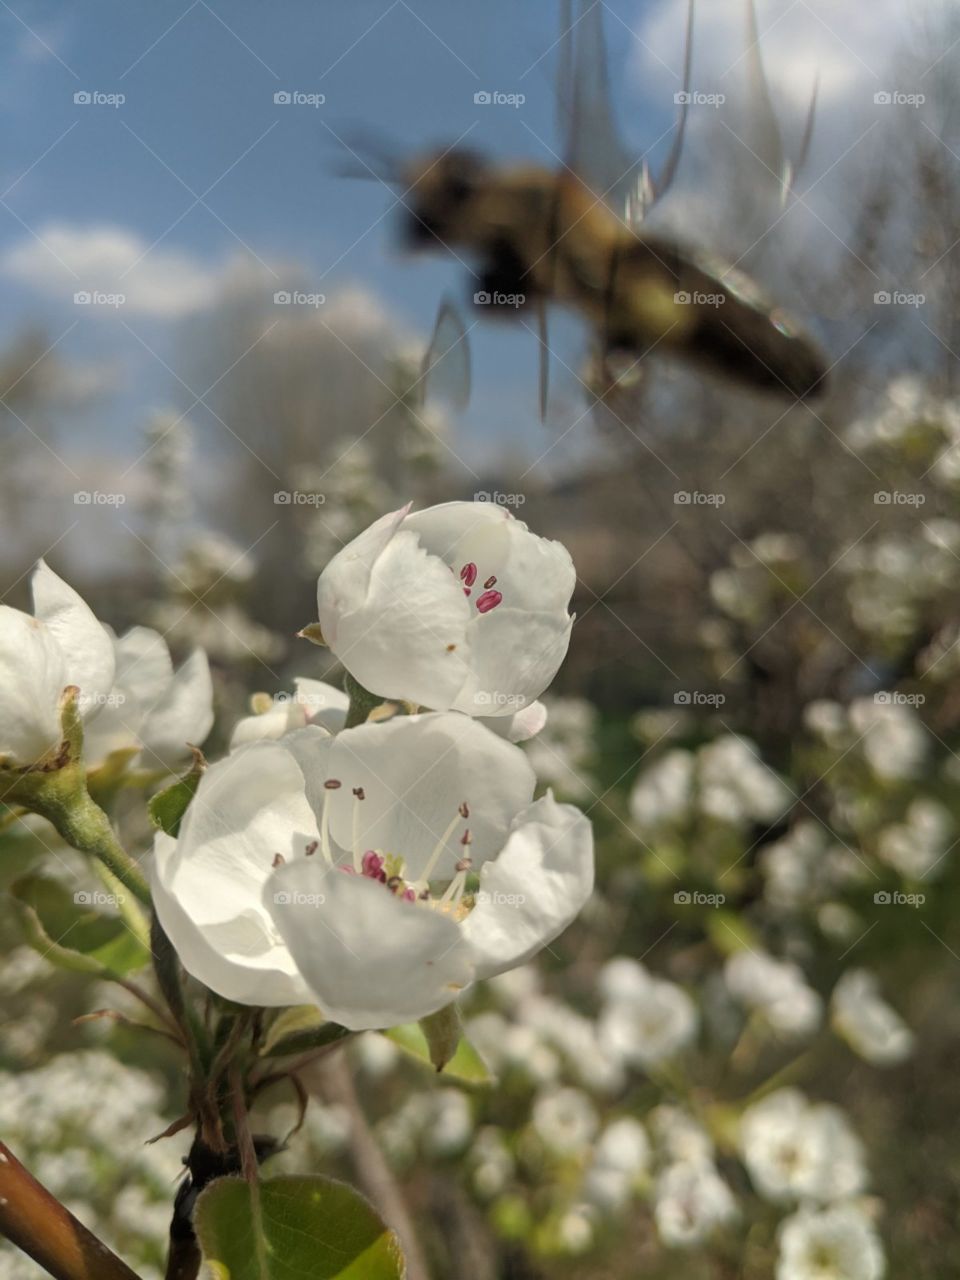 Flower+bee